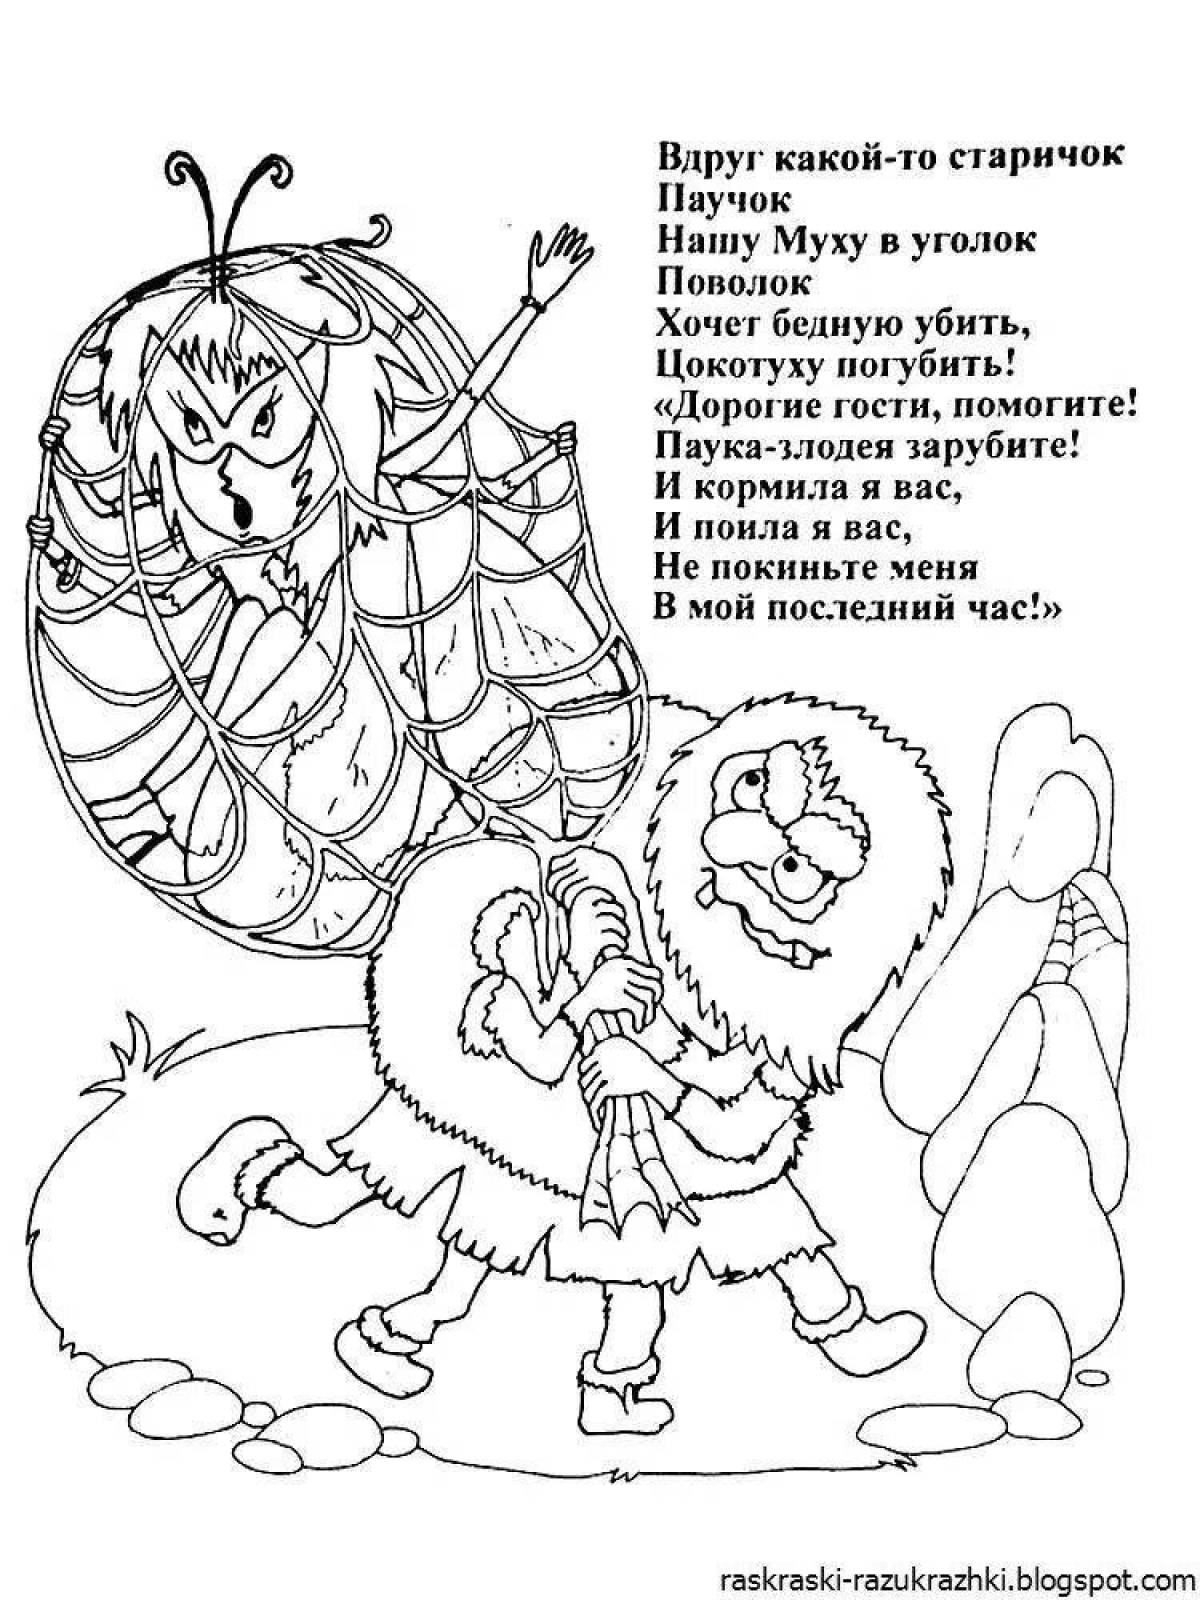 Chukovsky's creative coloring